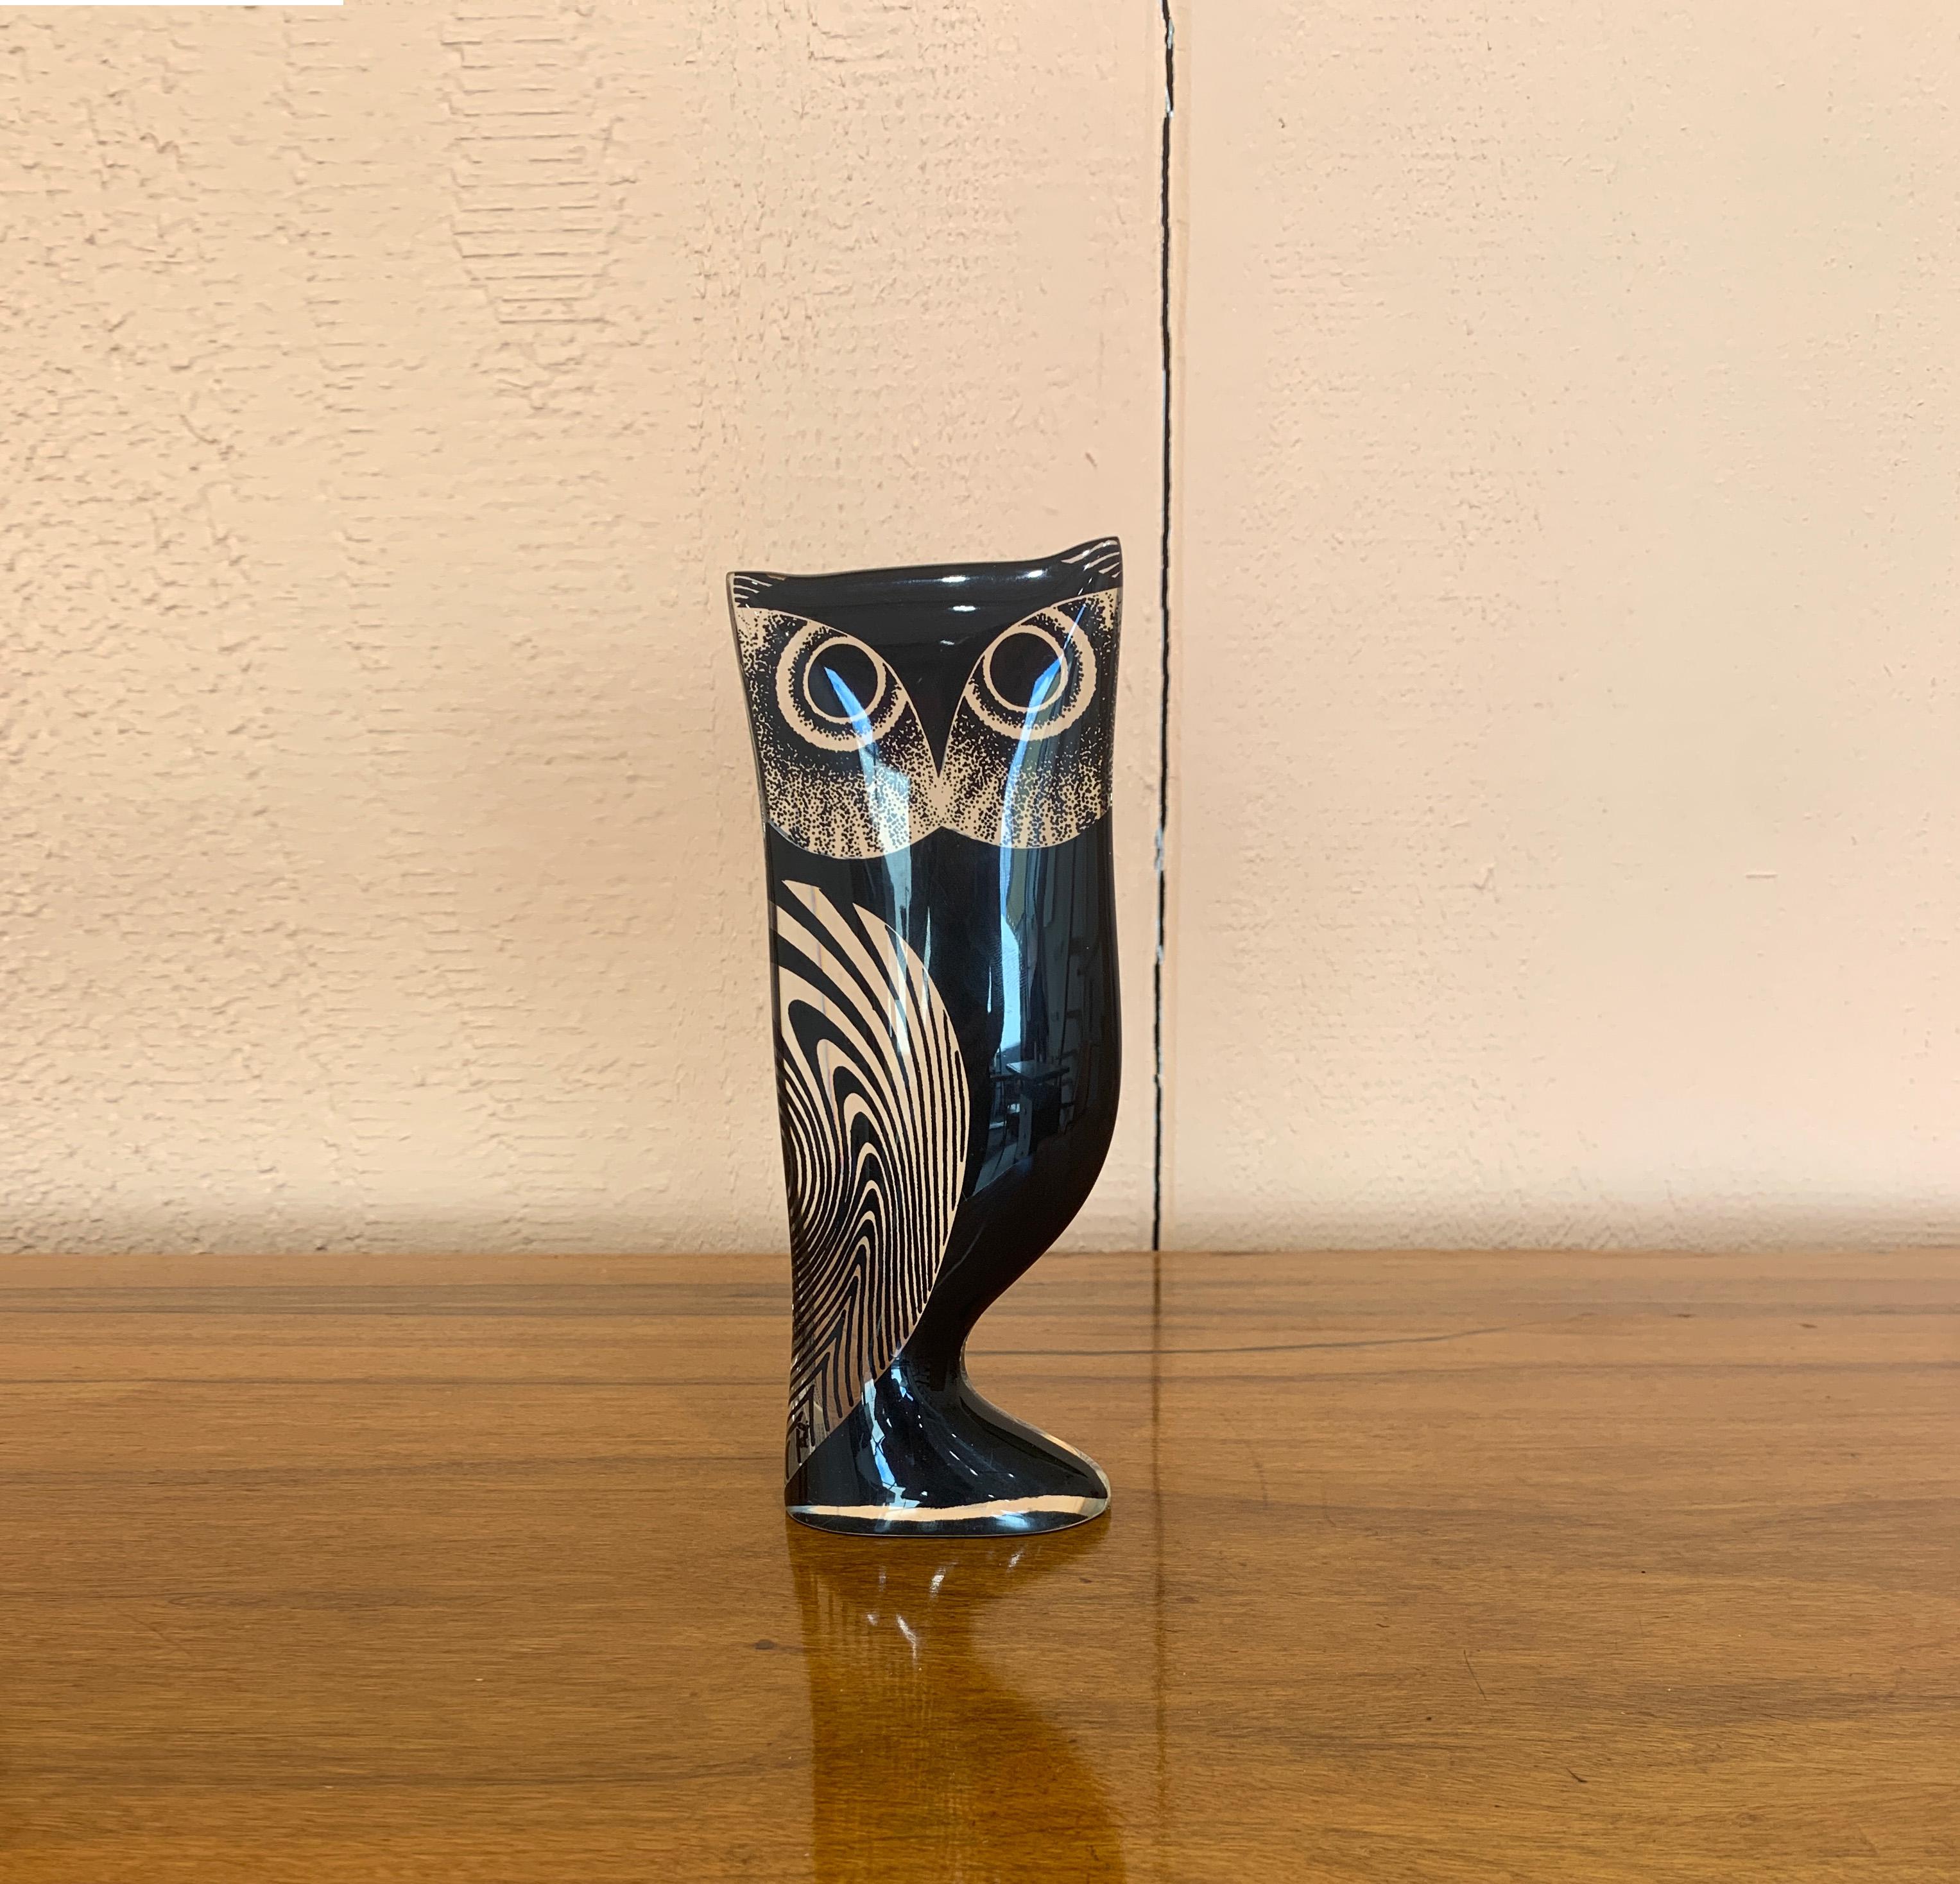 Acrylic Abraham Palatnik, Owl, Kinetic sculpture in acrylic resin. Brazil, c. 1970